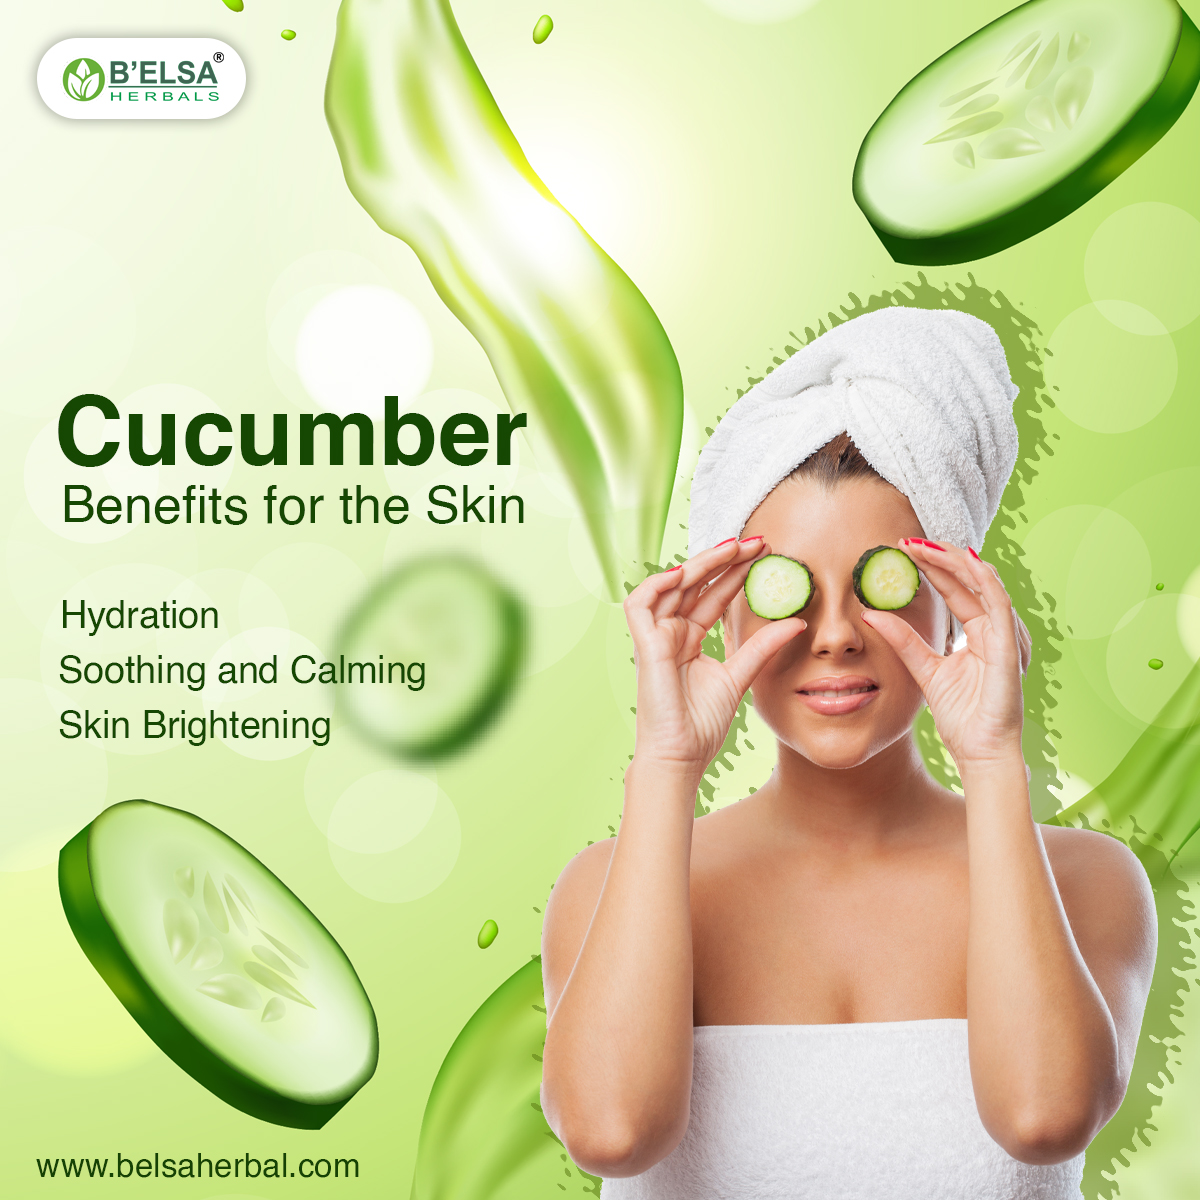 Rejuvenate your skin with the refreshing power of cucumbers!

#belsa #herbal #cosmetics #CucumberSkincare #RefreshAndRevive #NaturallyNourishing #SkinCareRoutine #HealthySkin #GreenBeauty #NaturalIngredients #GlowingComplexion #SelfCare #power #SkinRenewal